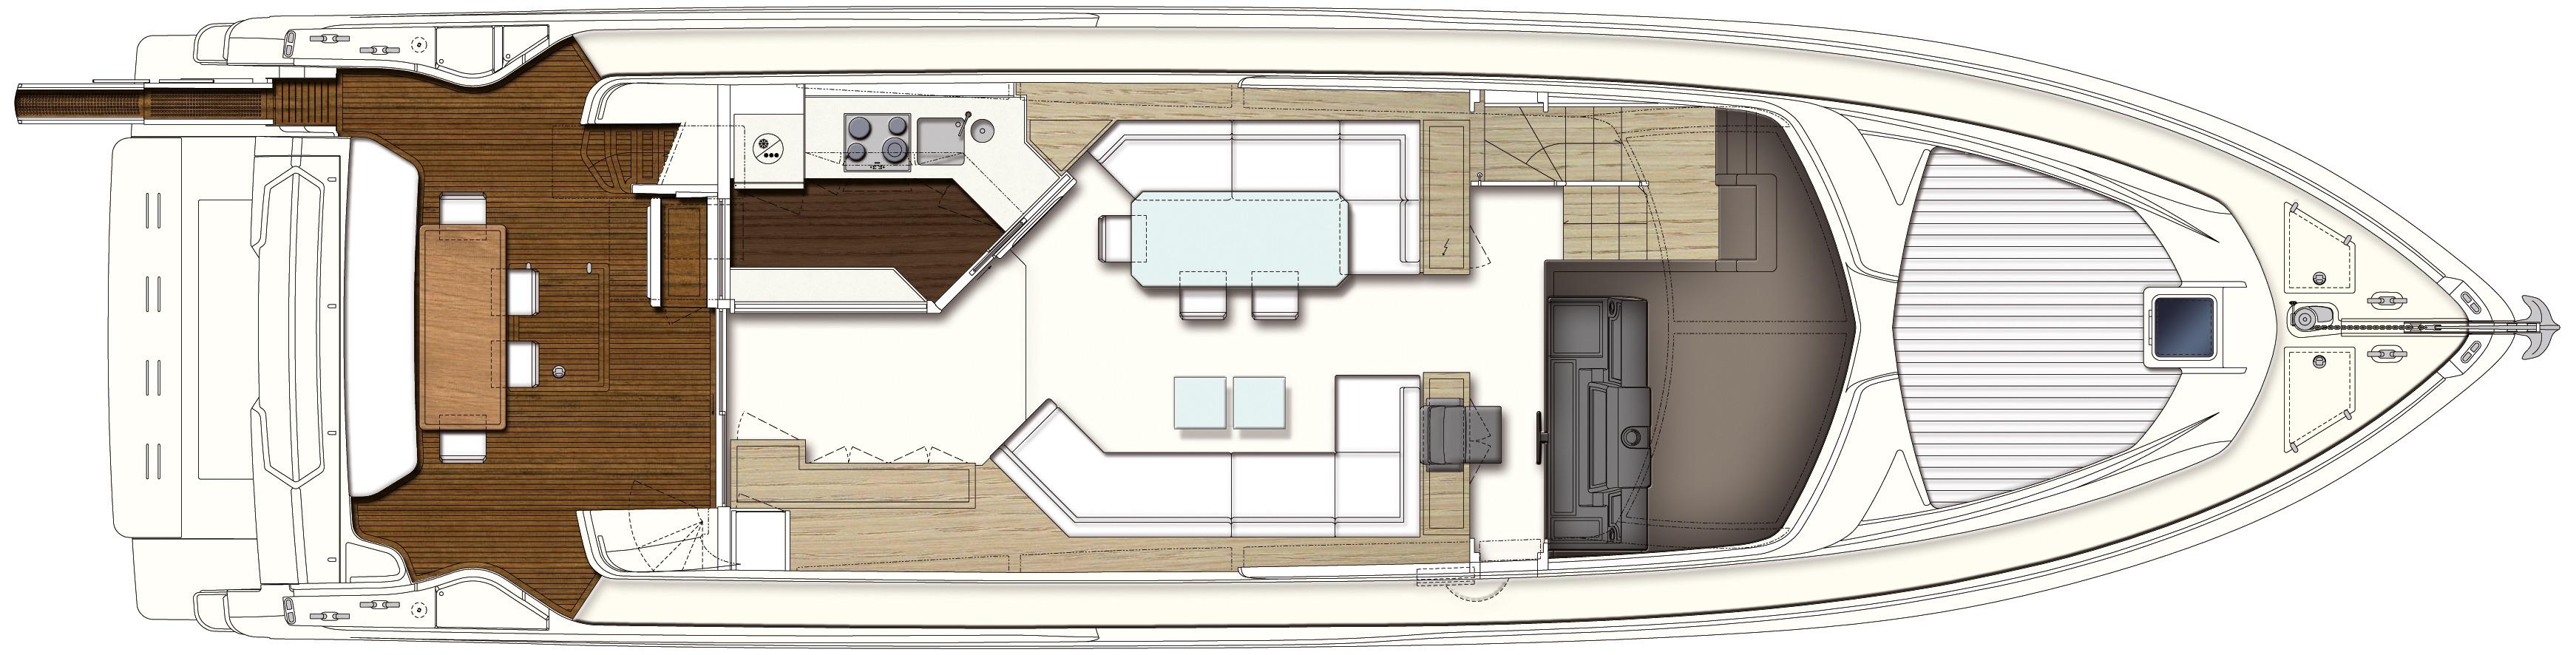 Manufacturer Provided Image: Ferretti 690 Main Deck 3 Cabin Layout Plan